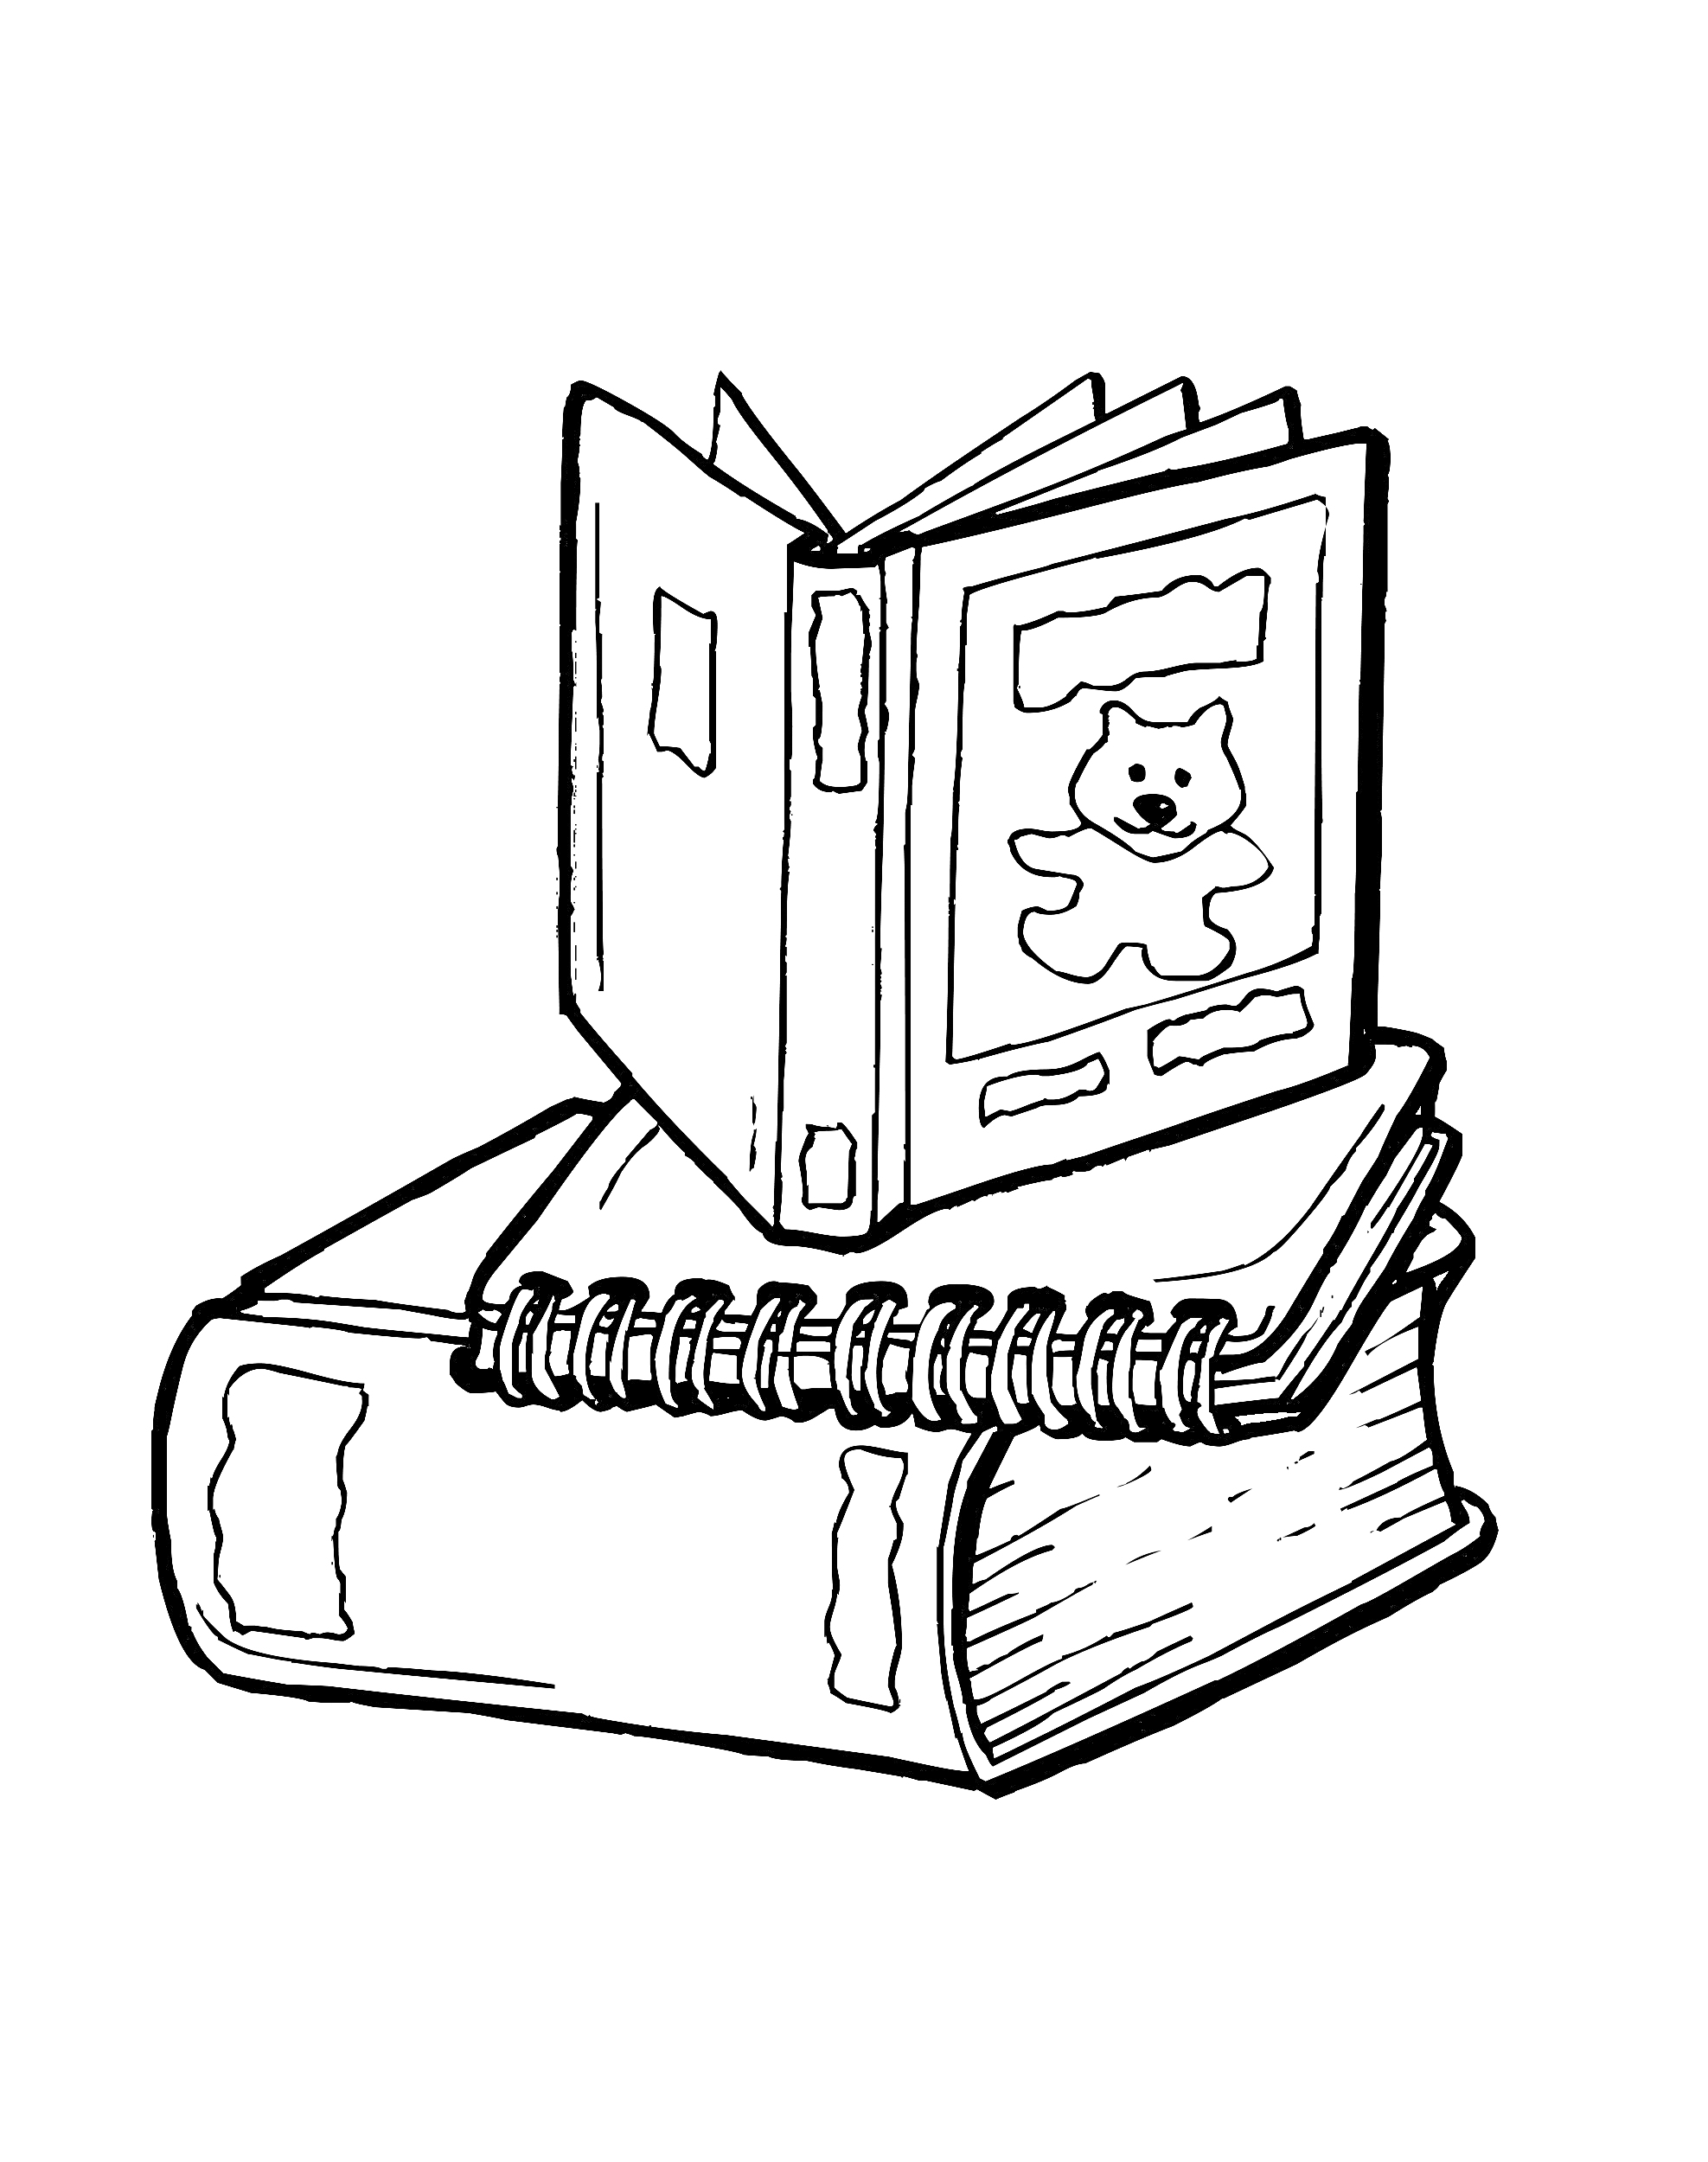 Учебники и блокнот с рисунком медвежонка